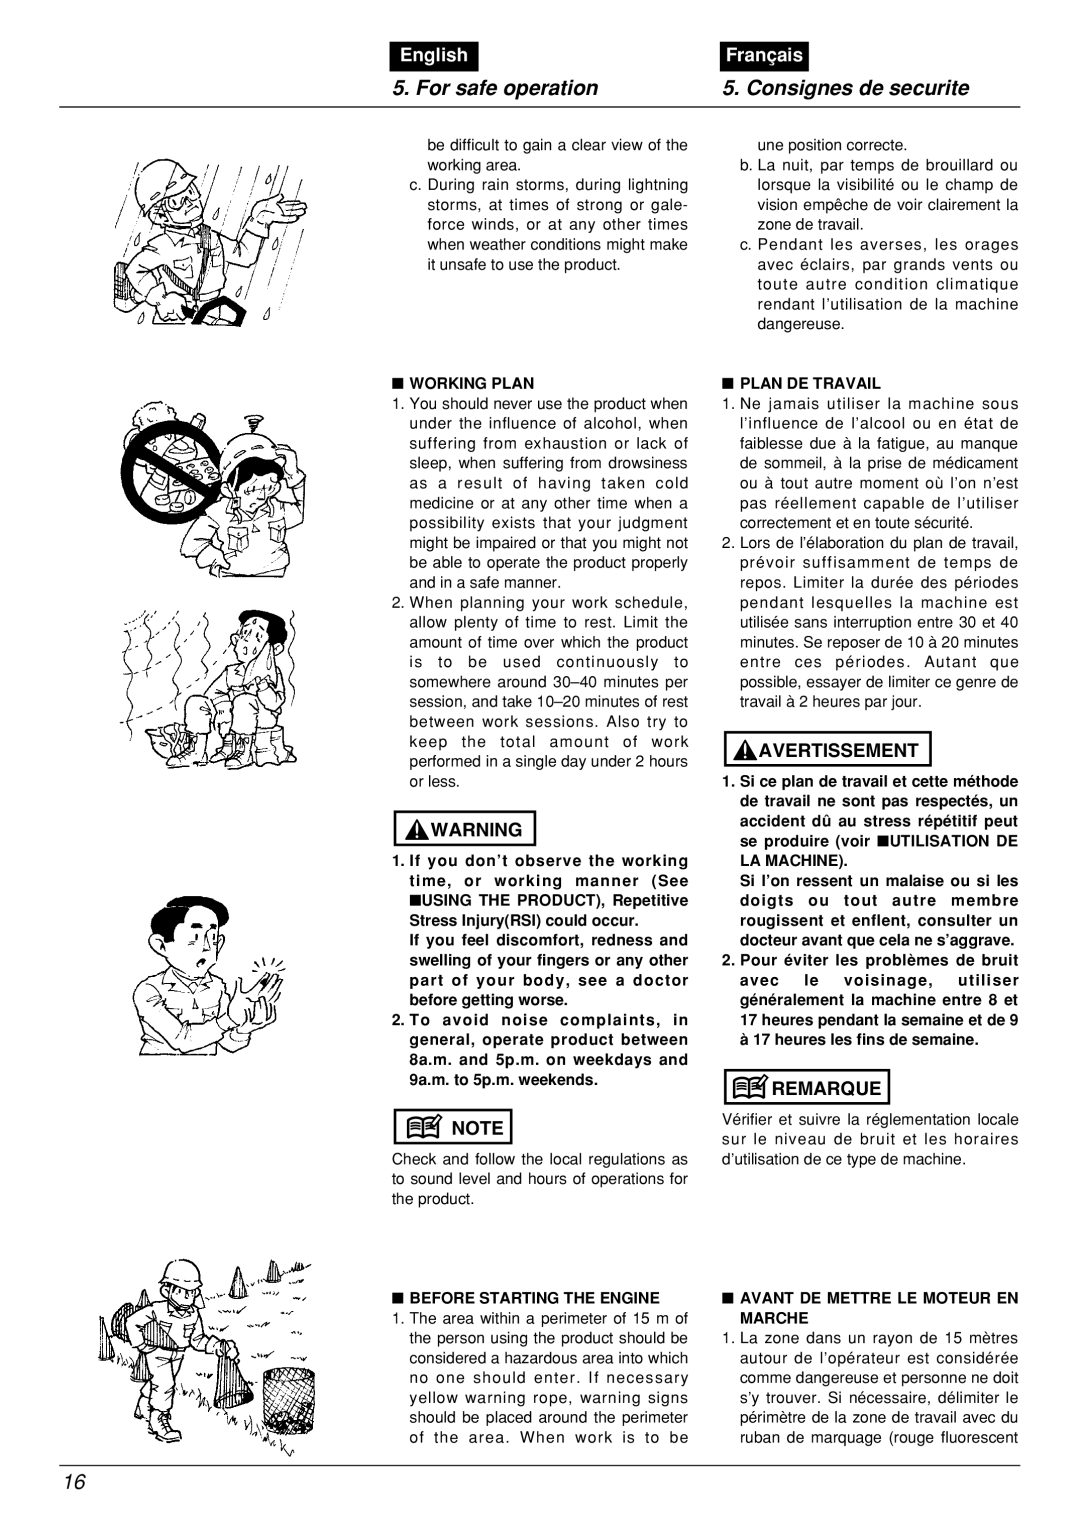 Zenoah BCX2601DL manual For safe operation, Consignes de securite, English, Français, Working Plan 